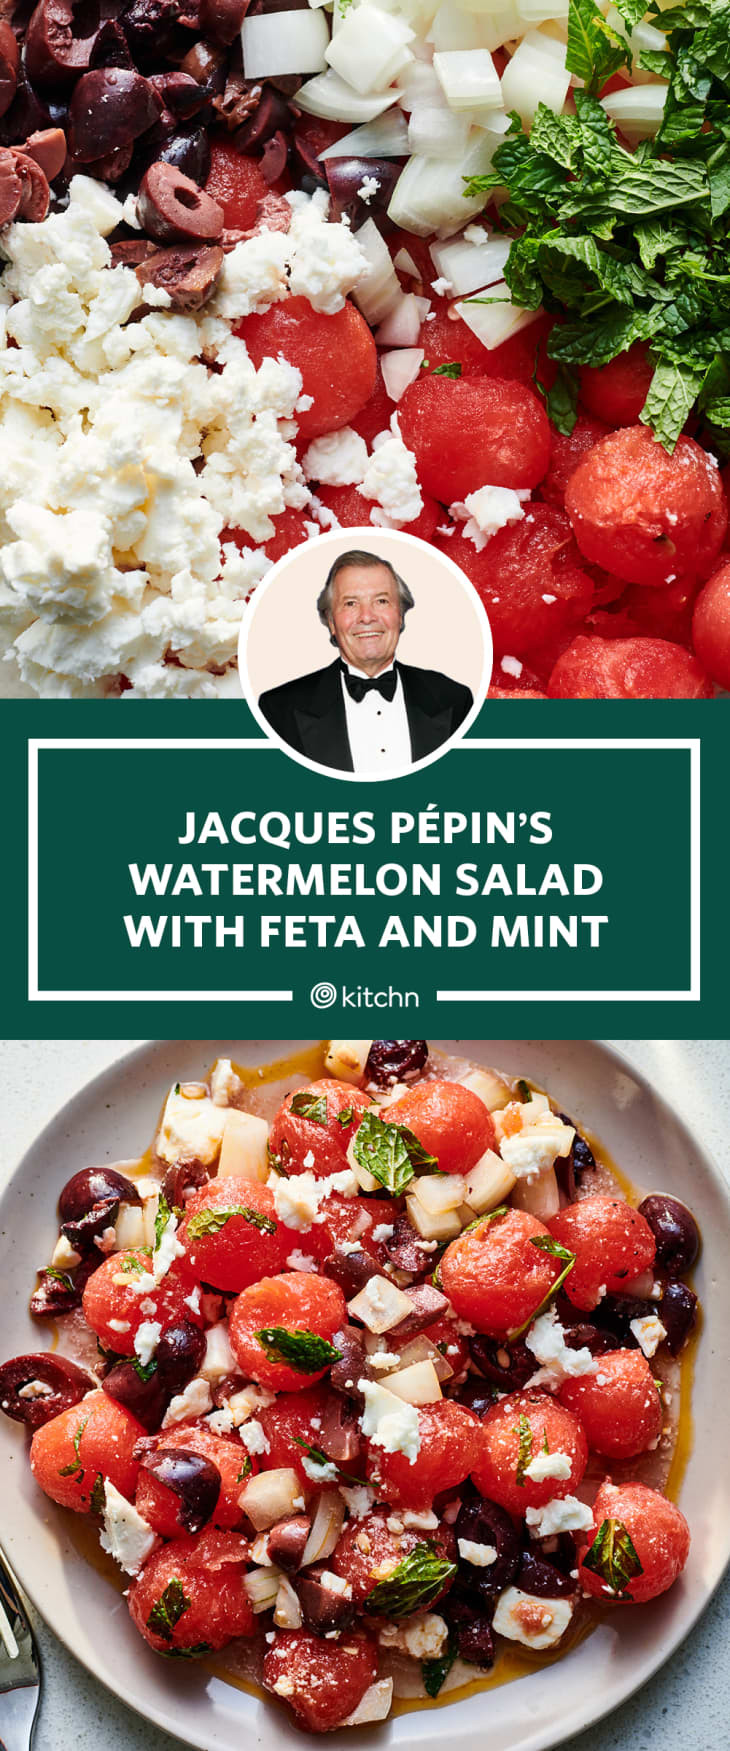 Photos of Jacques Pépin's watermelon salad recipe